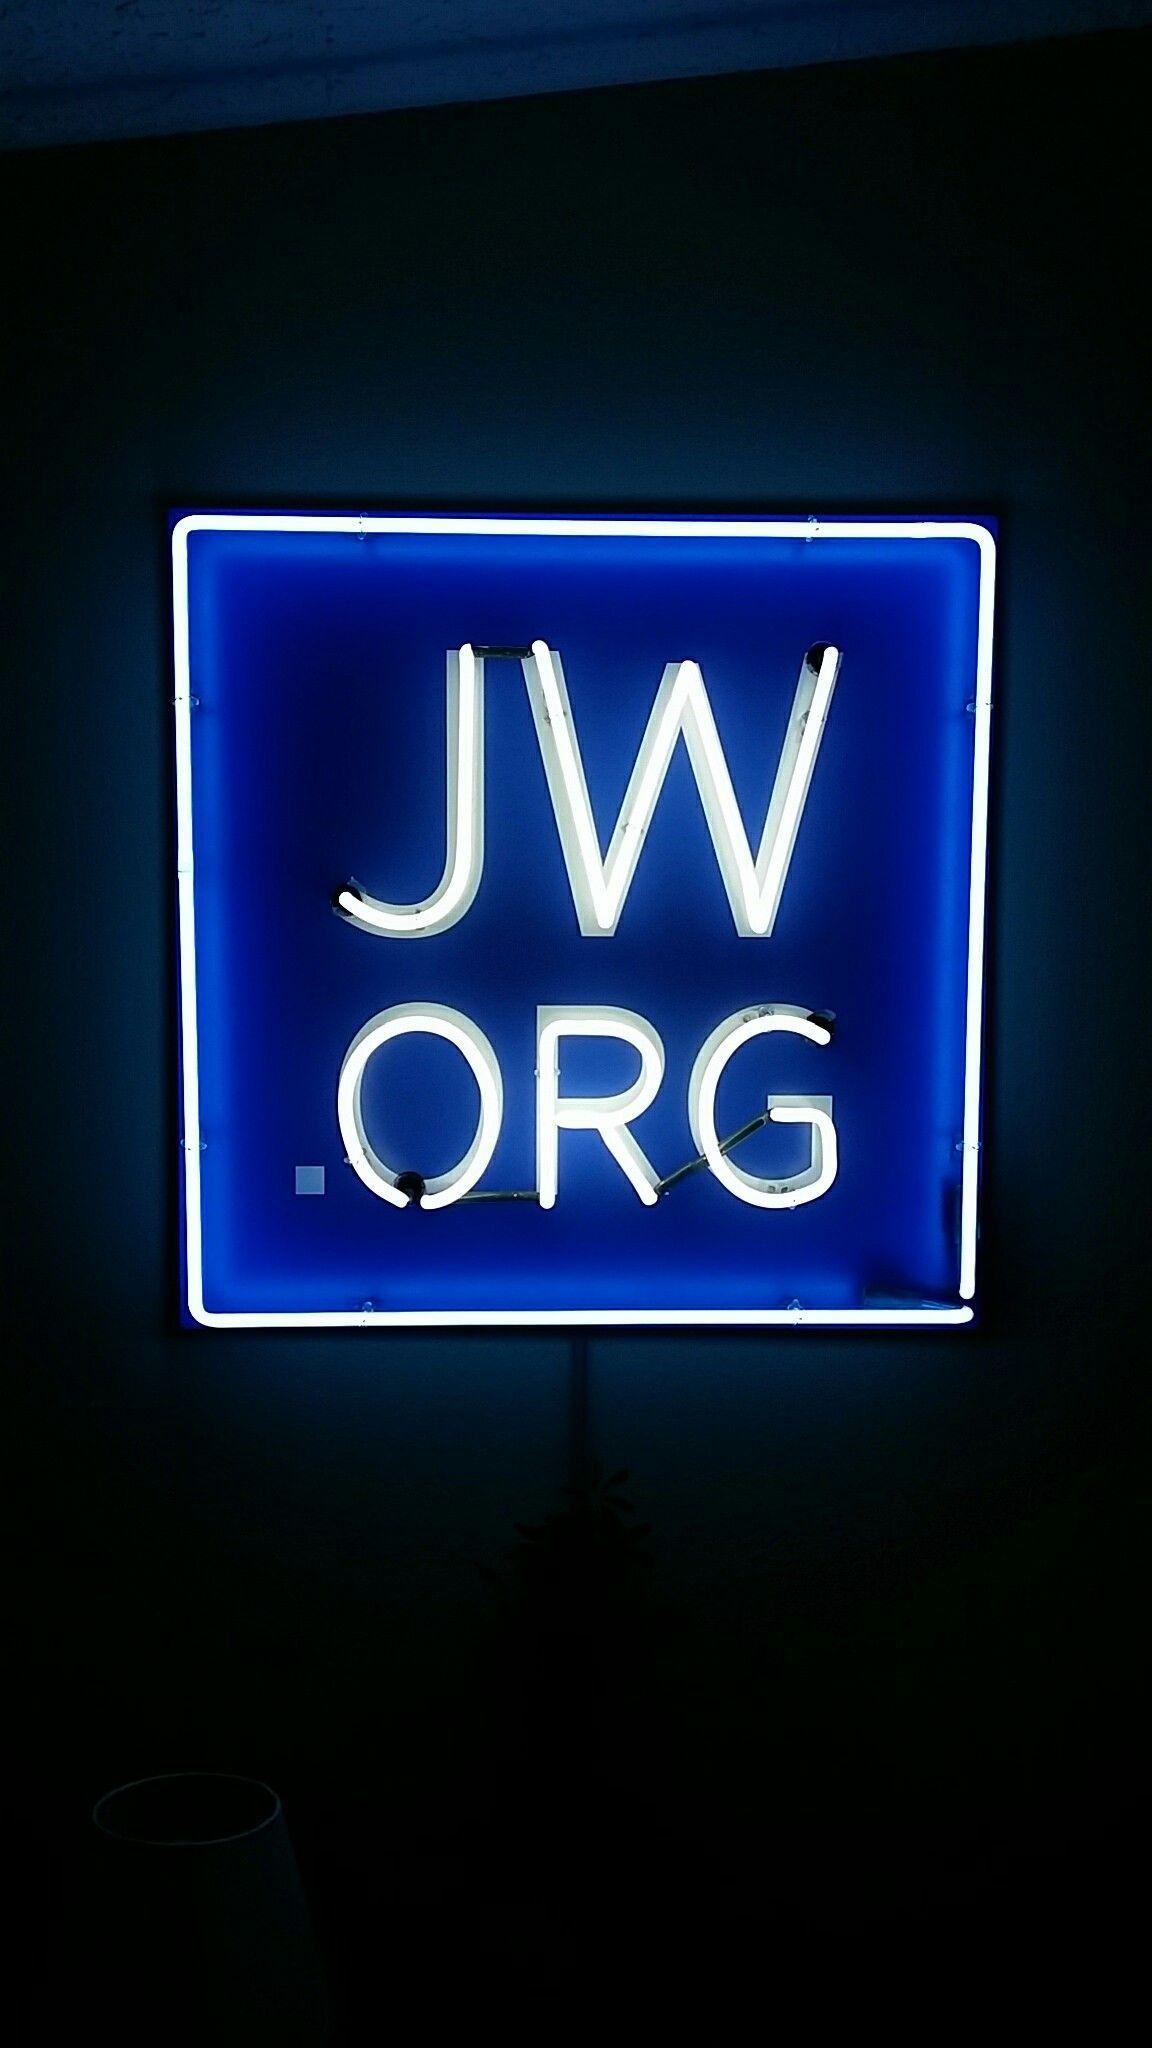 Jw.org Logo - Jw.org. JW.ORG LOGO. Stuff to buy, Logos